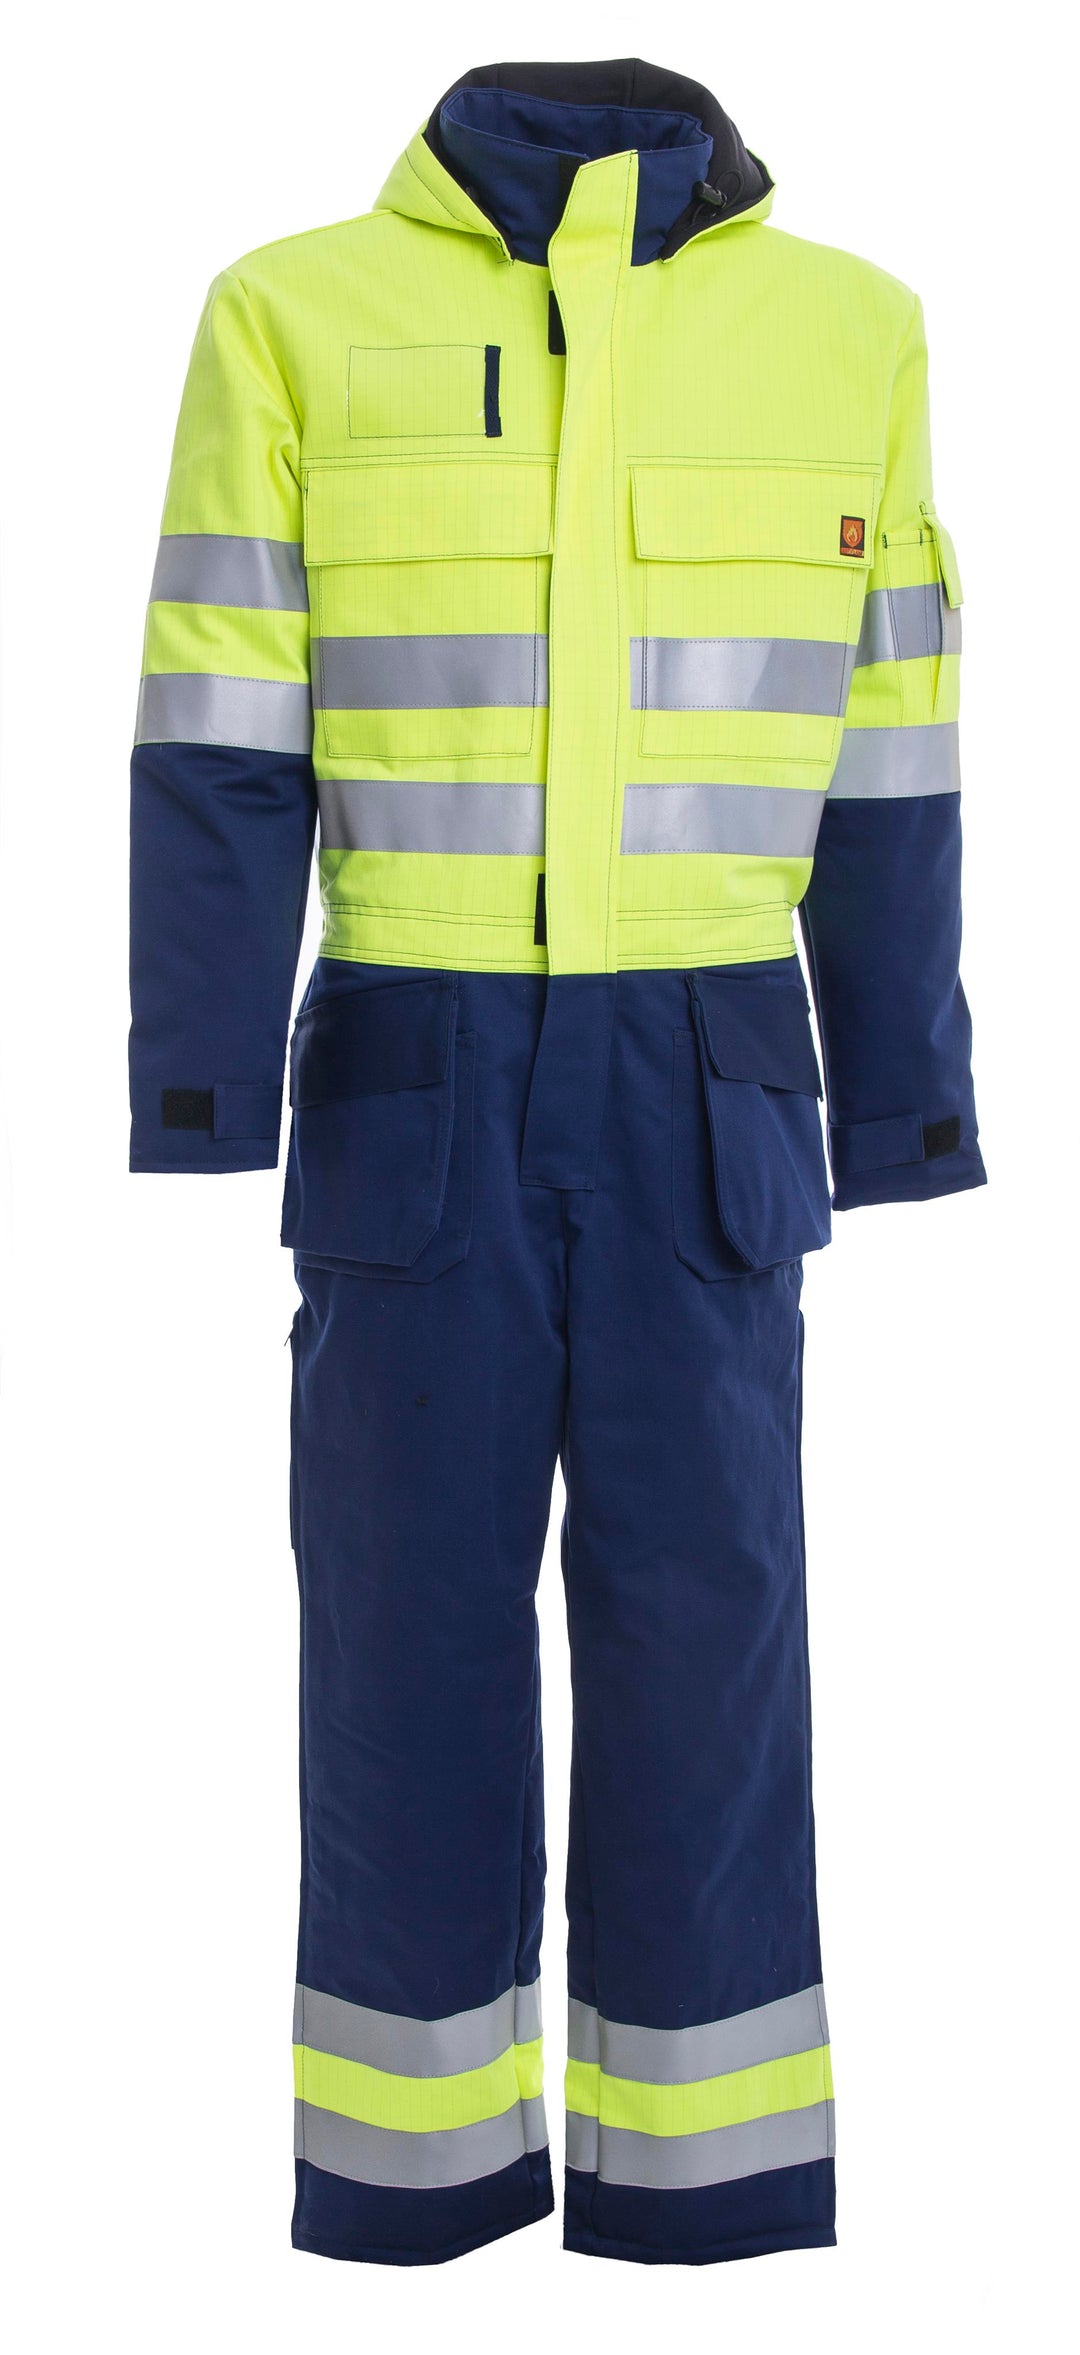 Winter overalls, fire-resistant Lk2